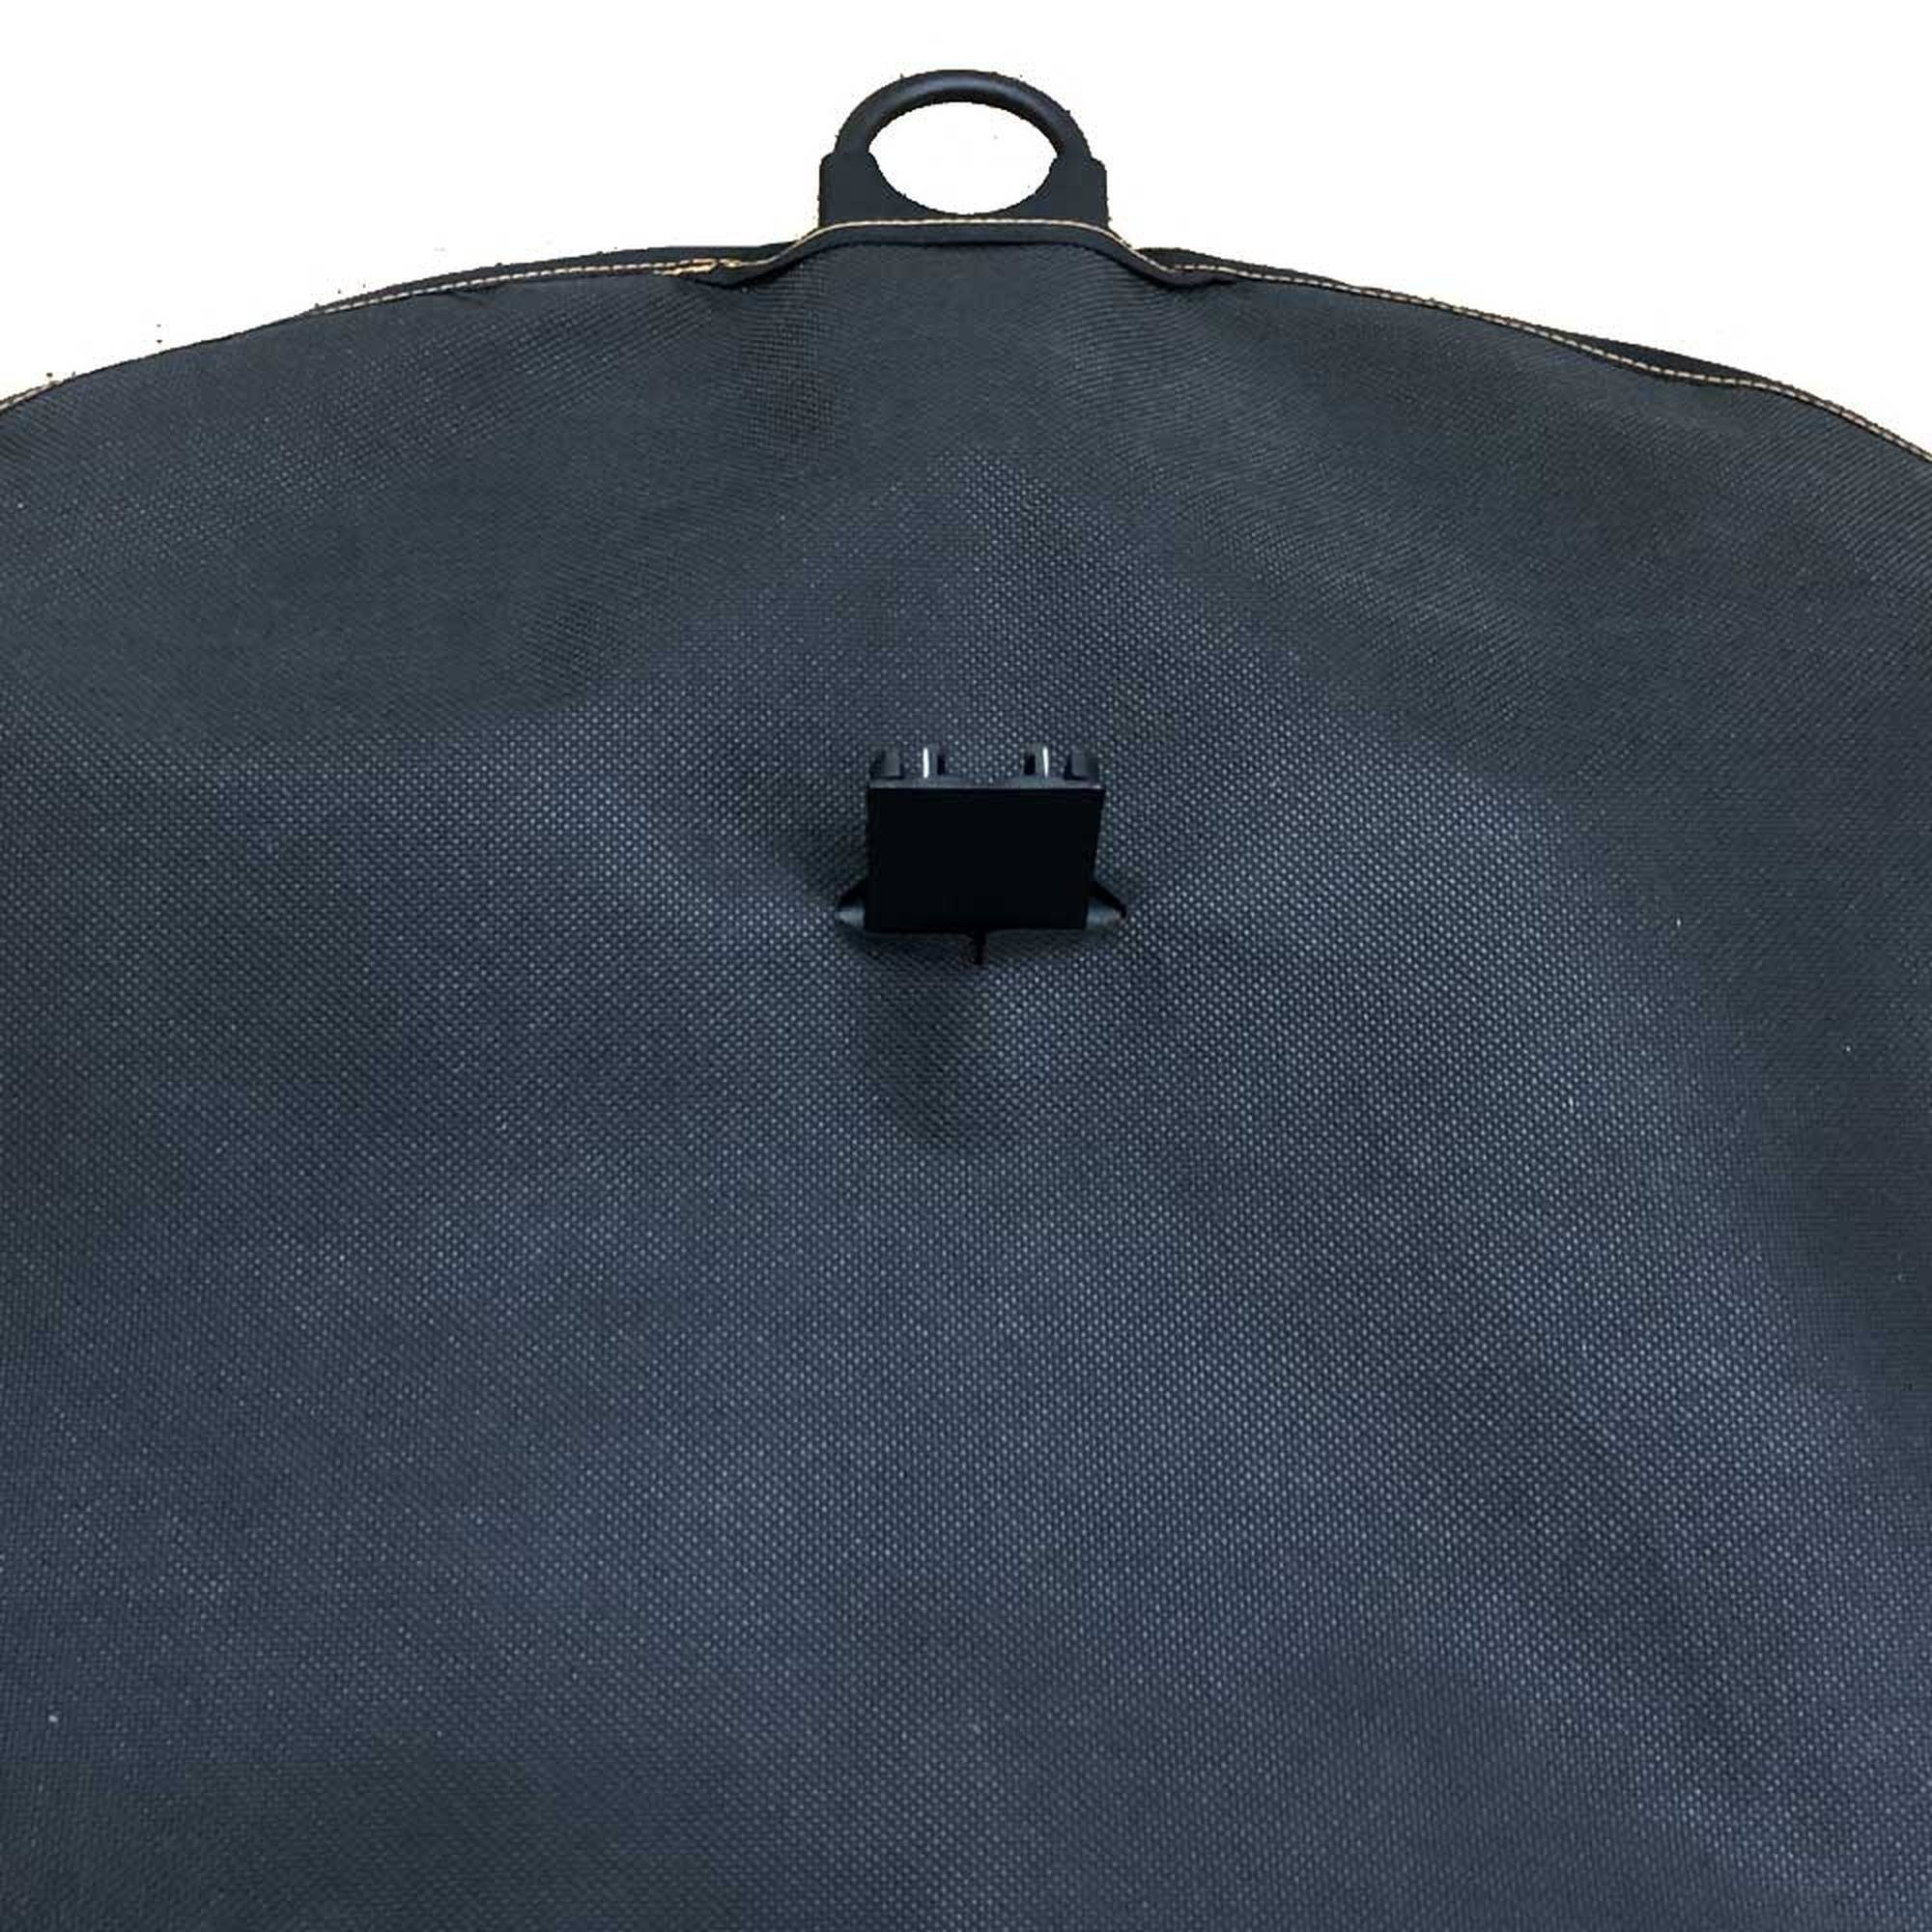 LANCO (Kleidersack), die Kopfstütze, Automotive LANCO für für Kleiderbügel Kleidersack Klick-System Autokleiderbügel passend exakt